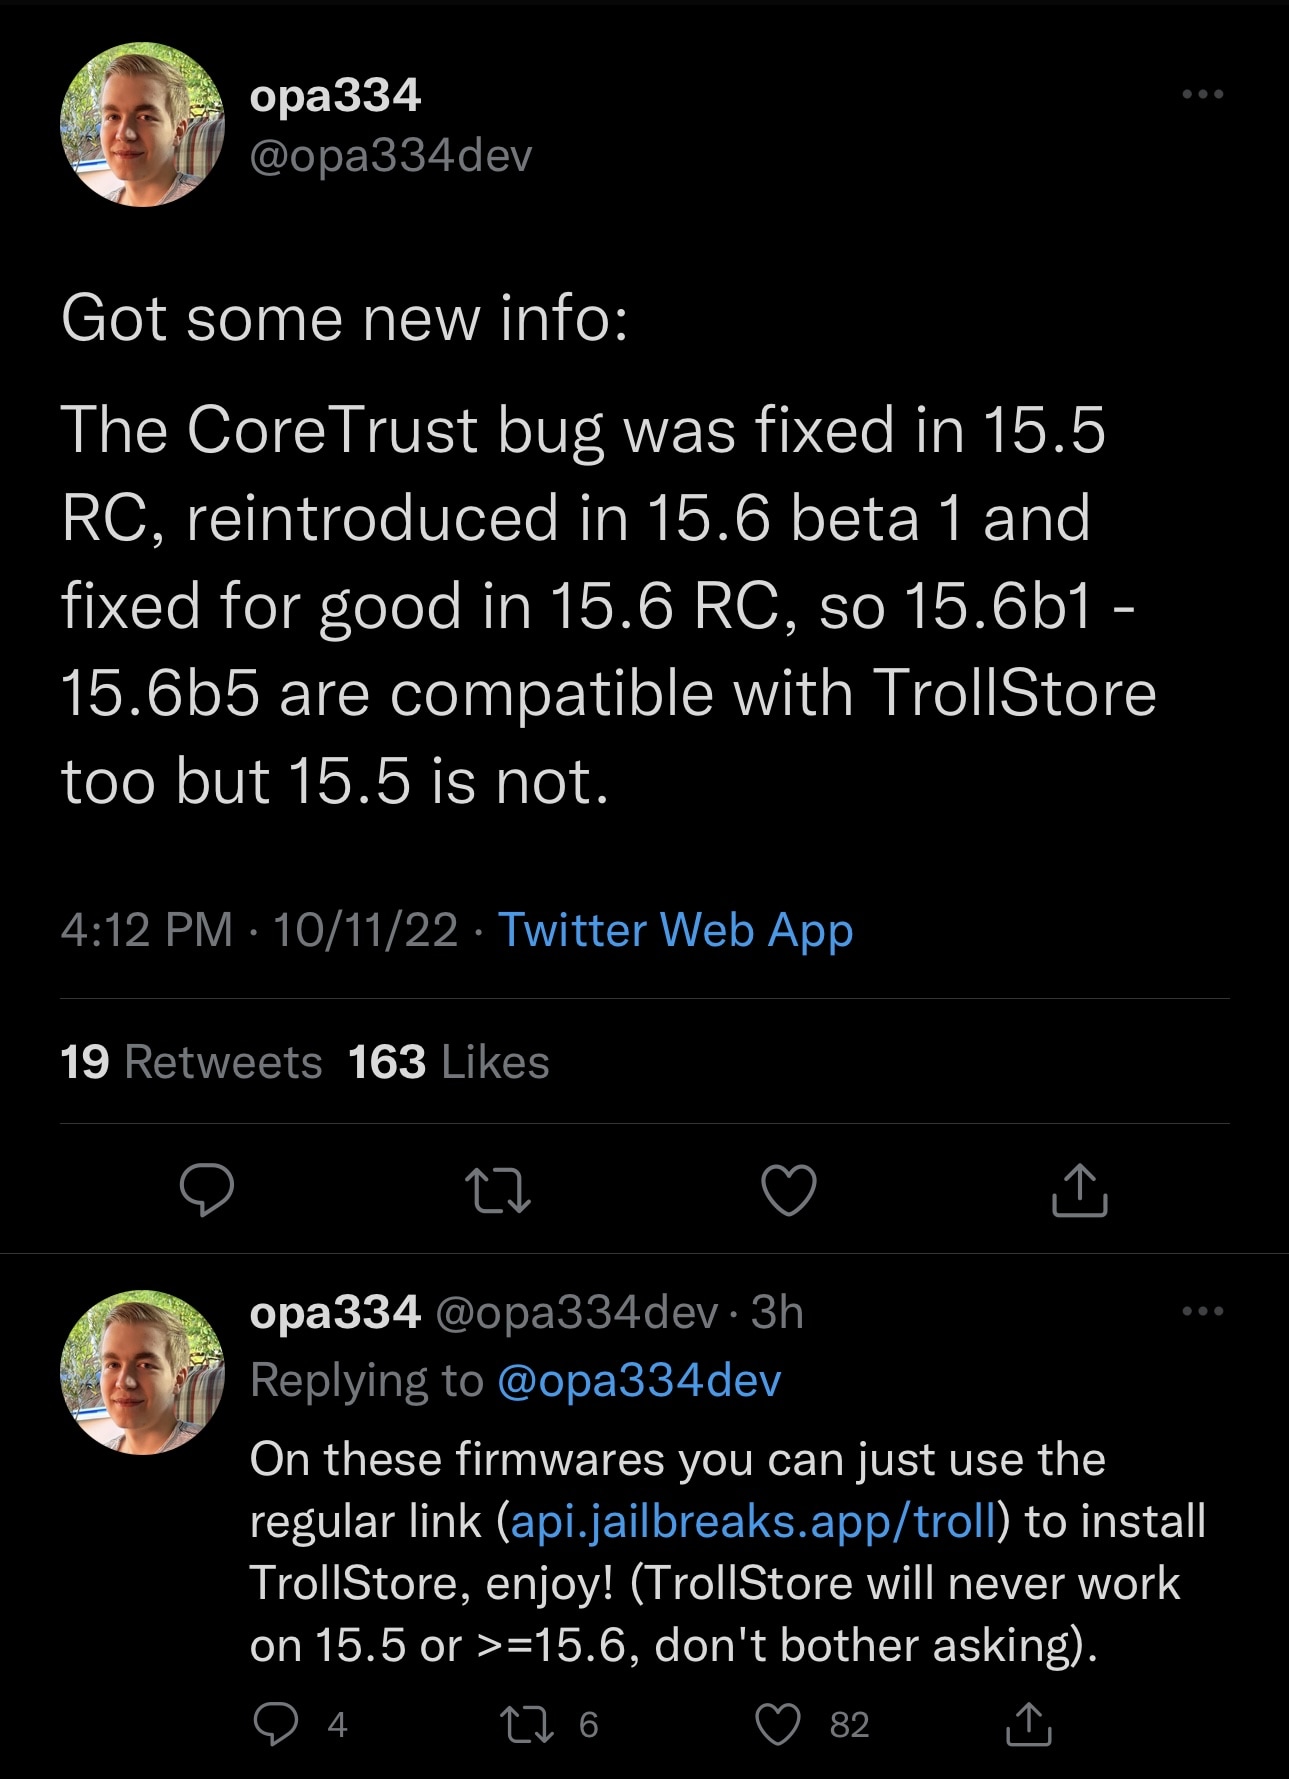 TrollStore CoreTrust bug may support iOS 15.6 beta.